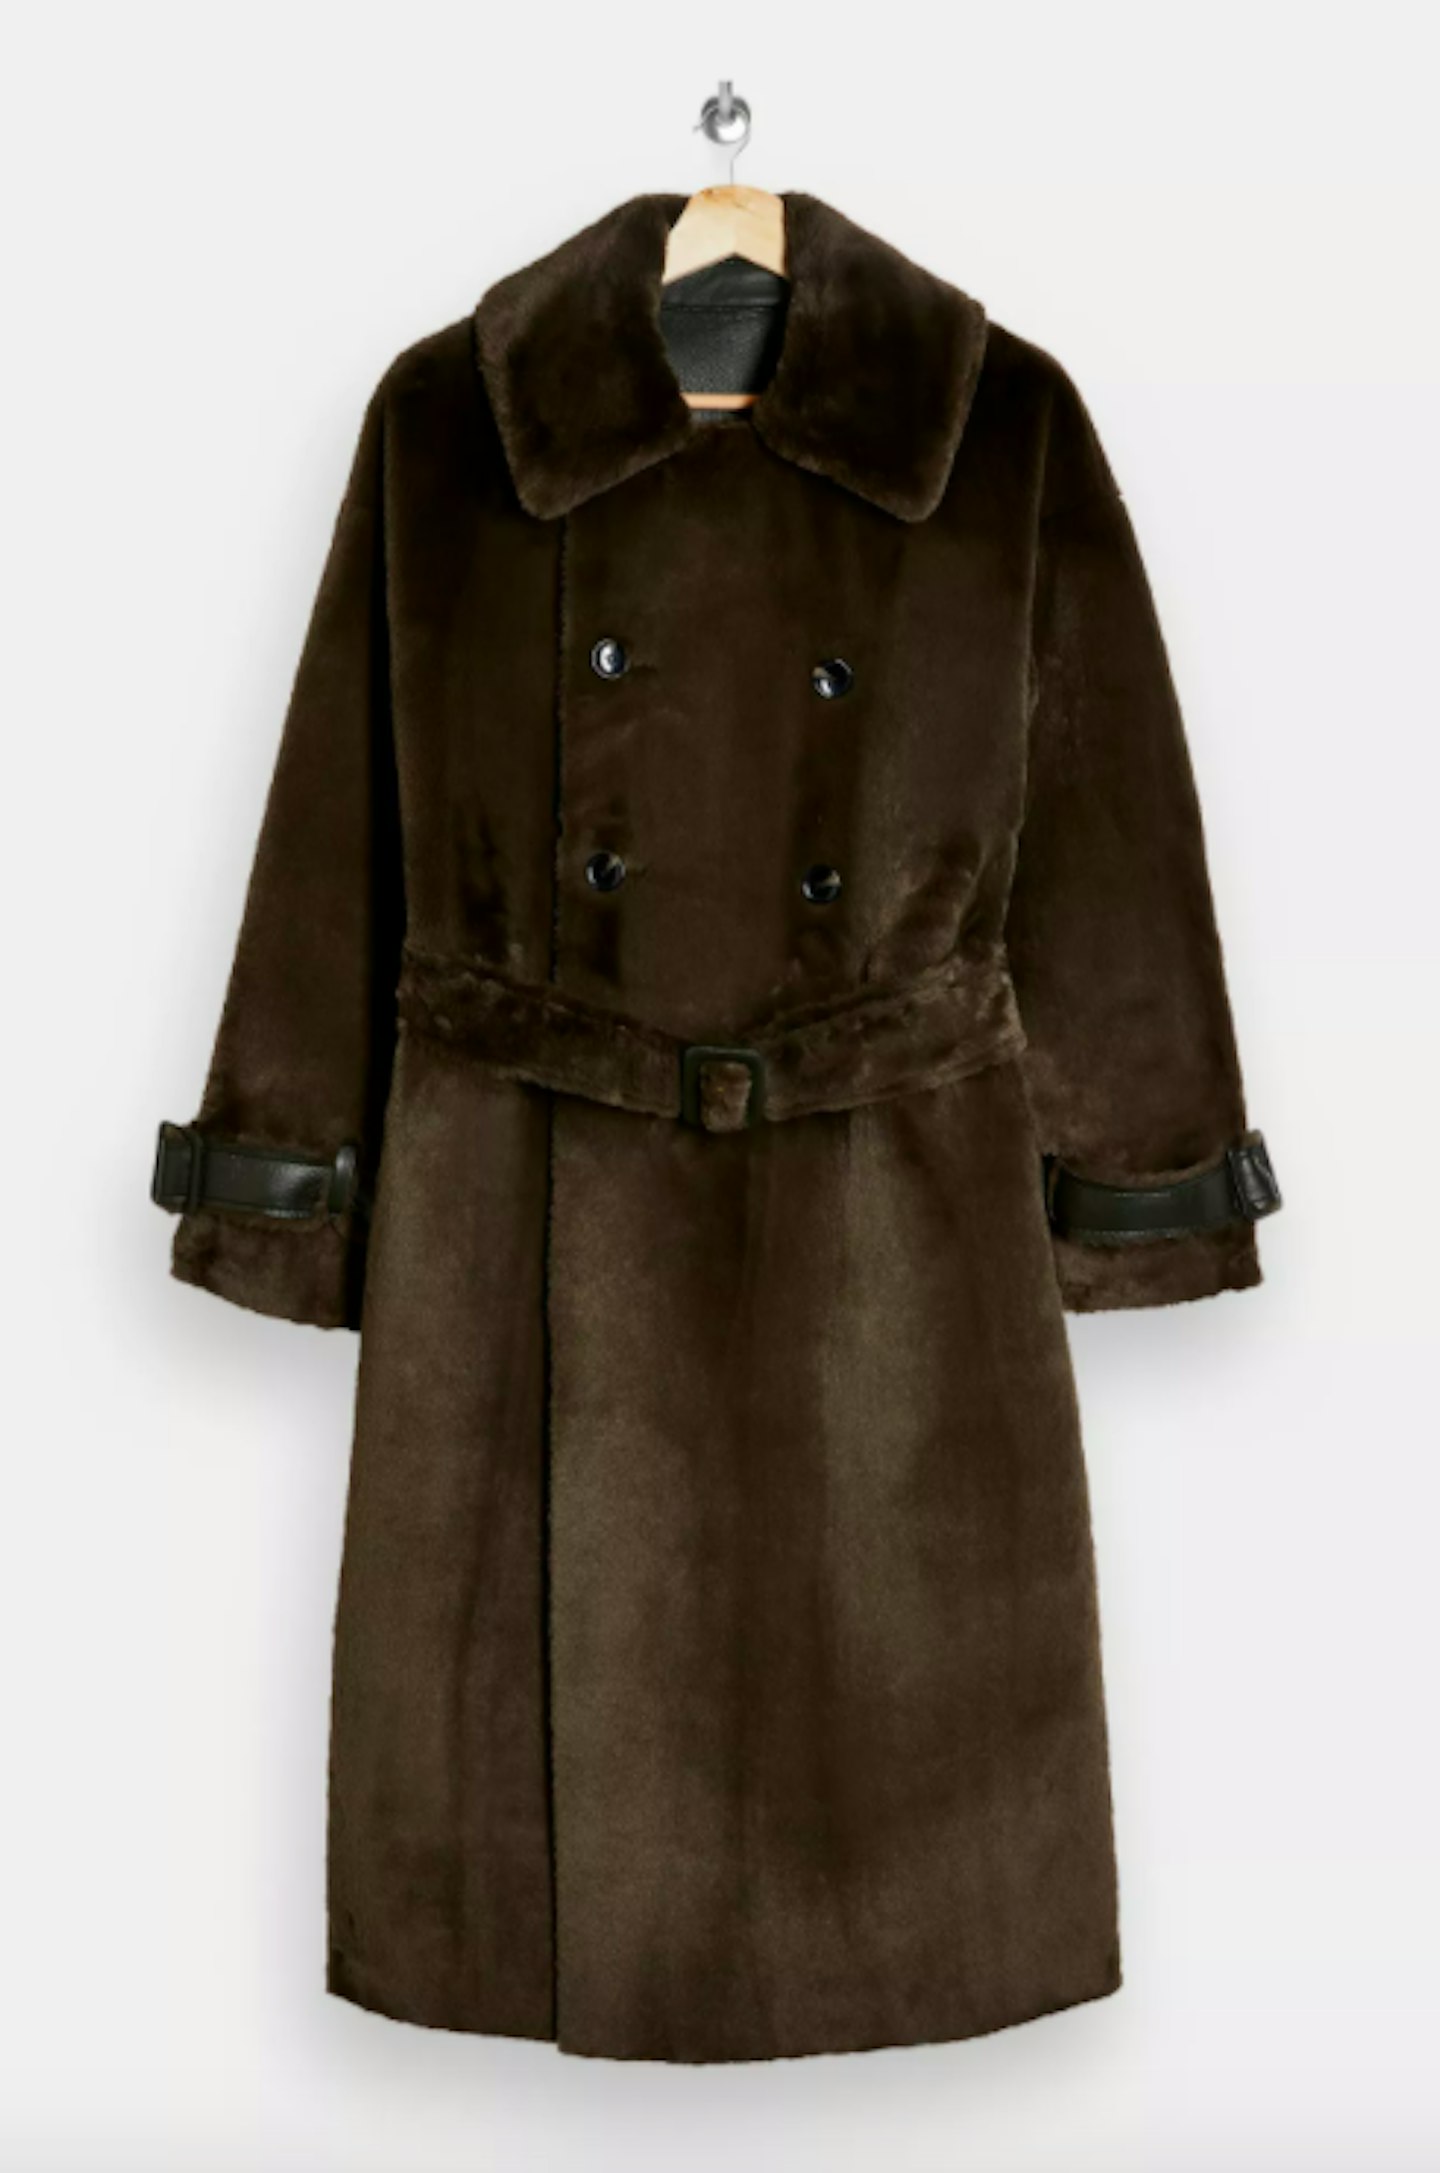 Topshop, Idol Khaki Reversible Faux-Fur Coat, £99.99